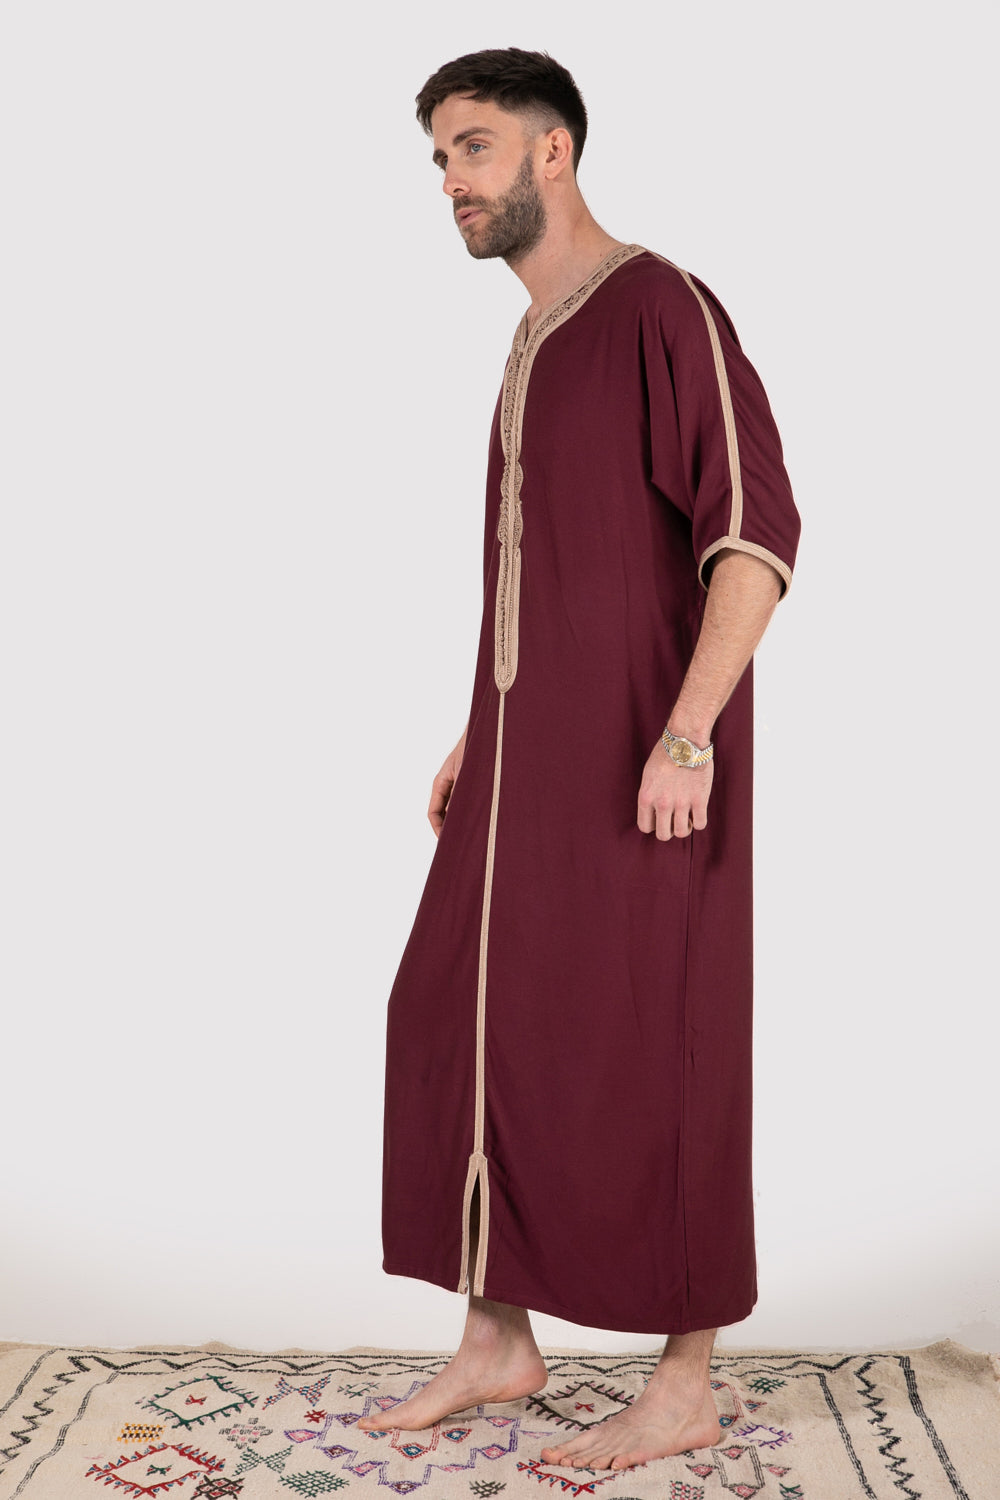 Gandoura Imrane Men's Short Sleeve Contrast Embroidery Full-Length Robe Casual Thobe in Burgundy